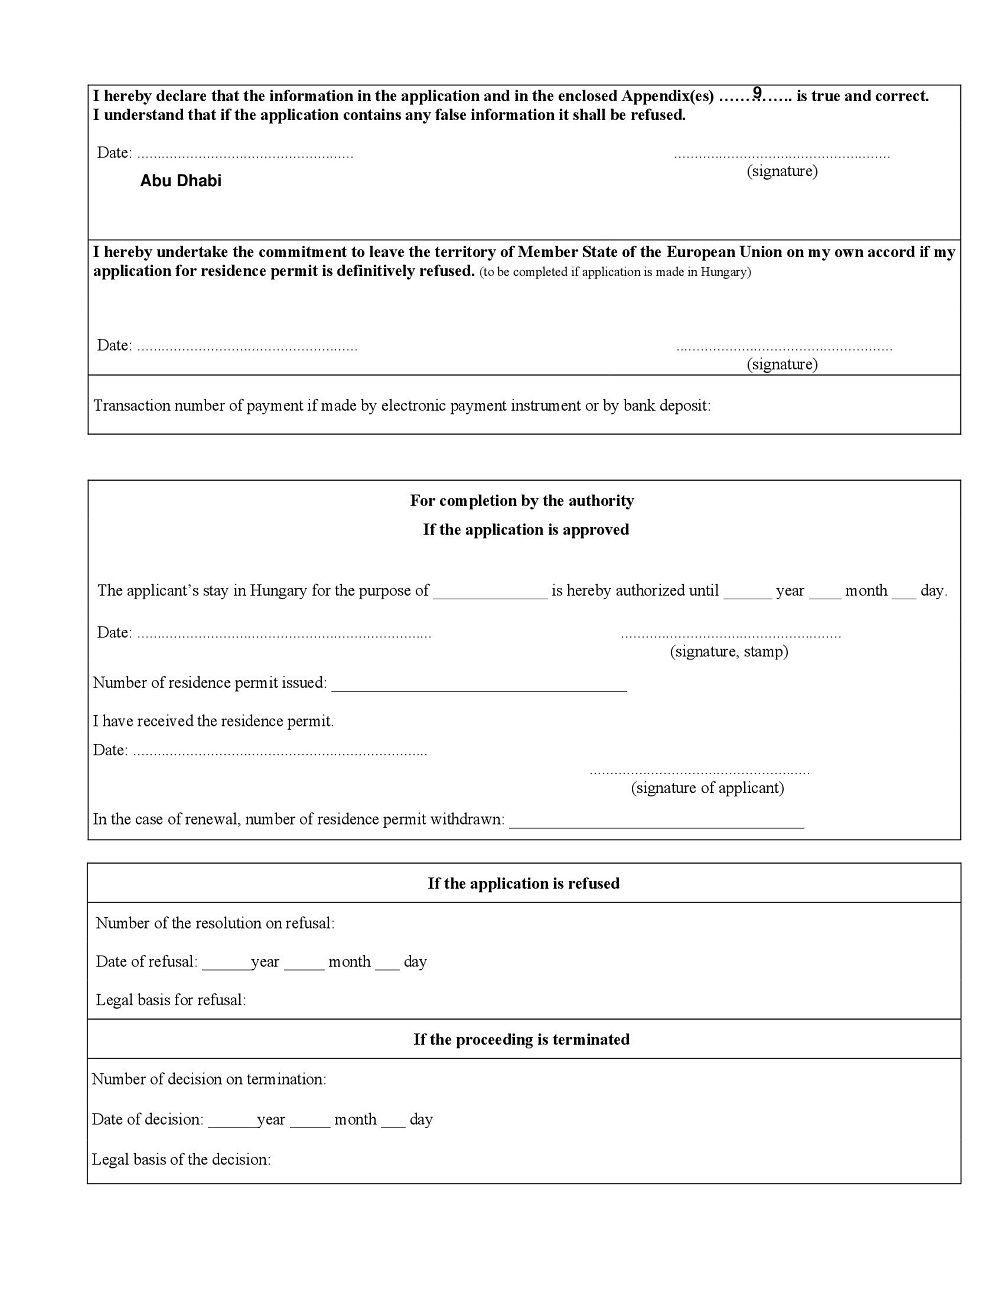 application form for Hungary work visa